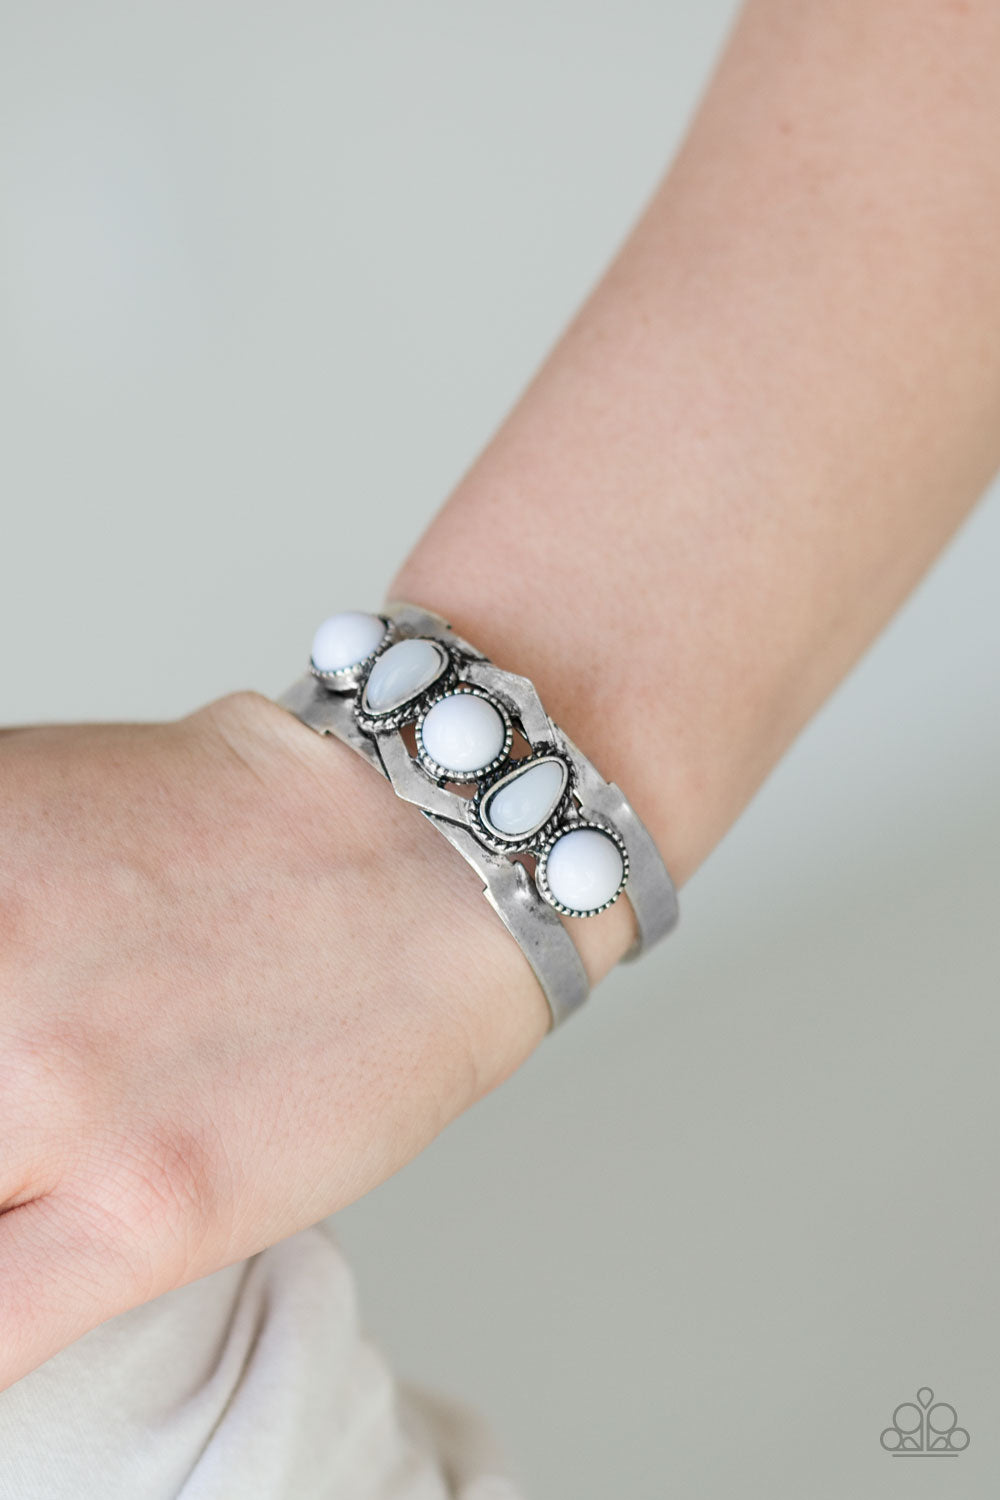 Keep On TRIBE-ing Silver Bracelet